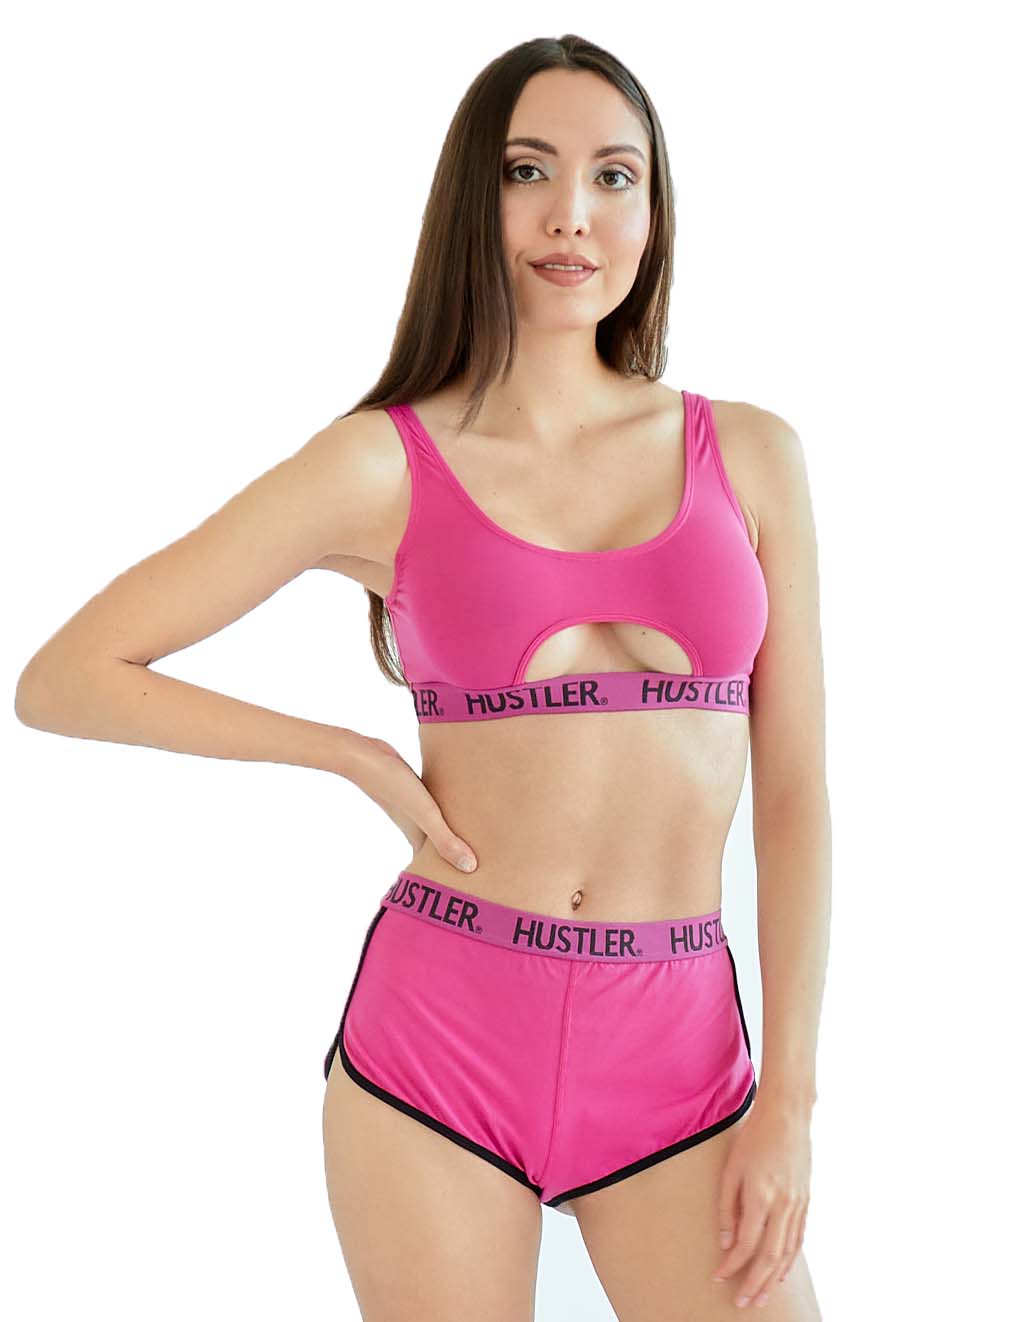 HUSTLER® Cutout Crop Top- Hot Pink/Black- Front